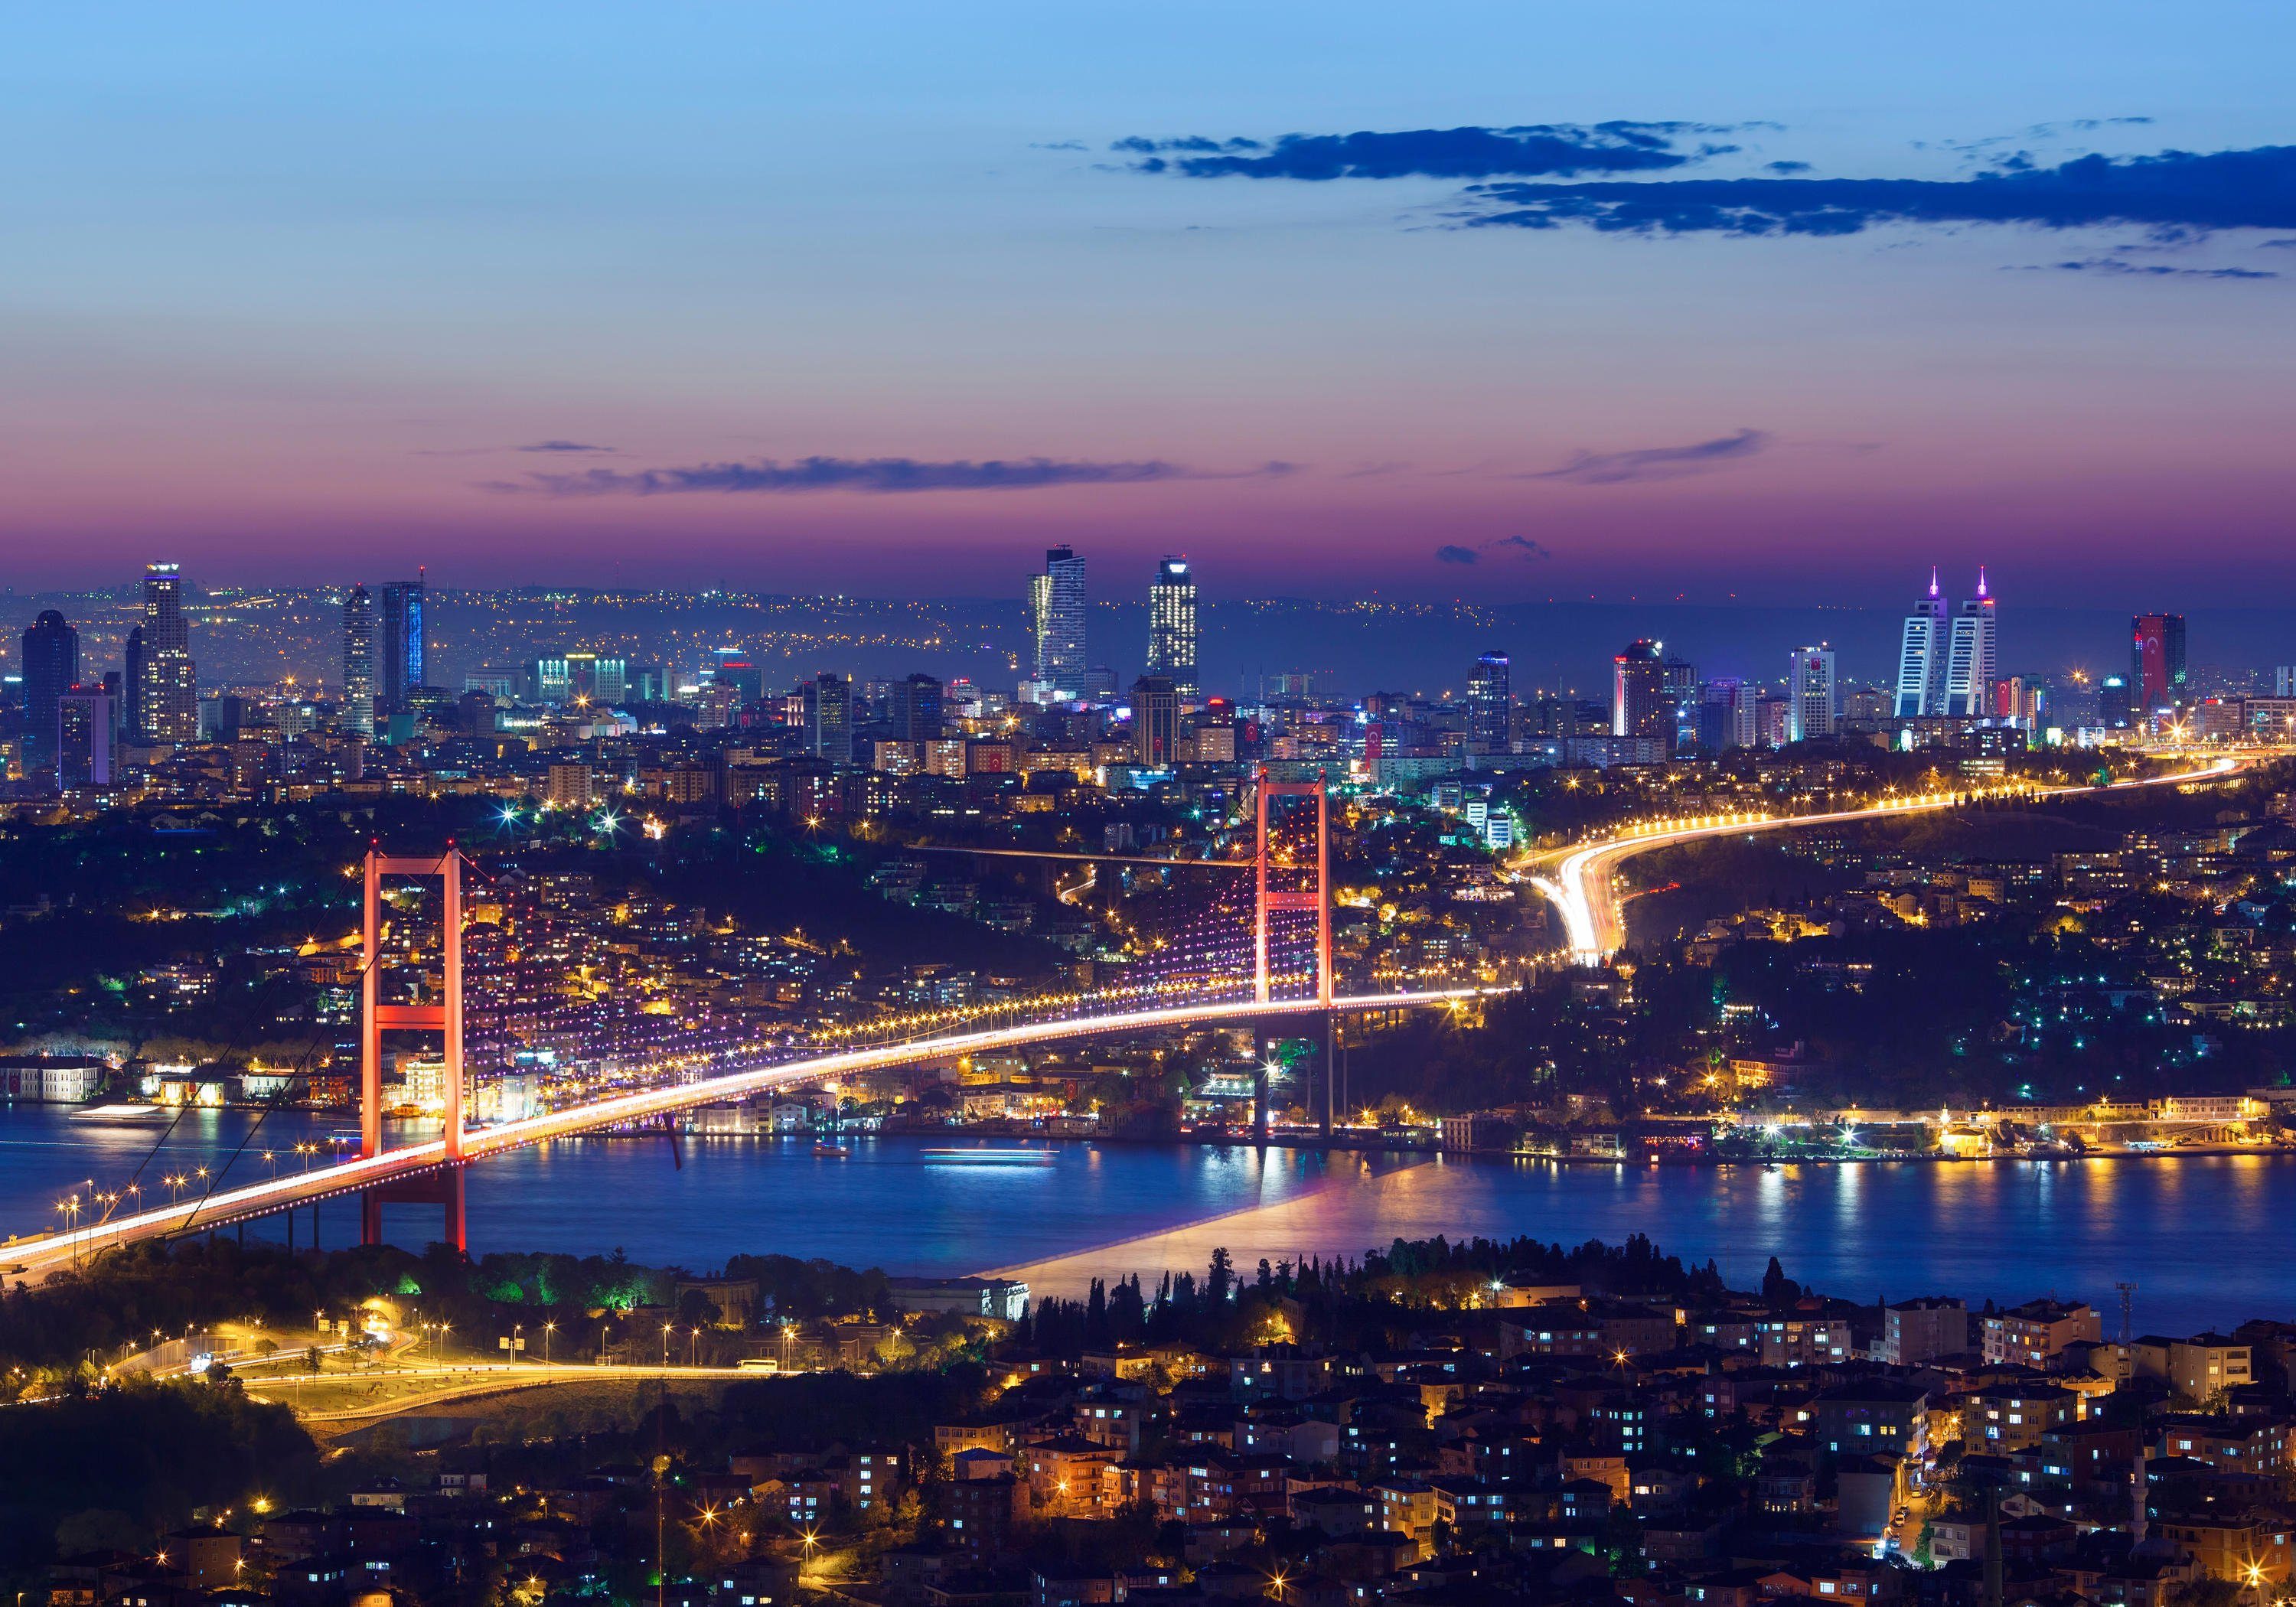 Fototapete Nacht, wandmotiv24 bei Wandtapete, matt, glatt, Vliestapete Istanbul Motivtapete,